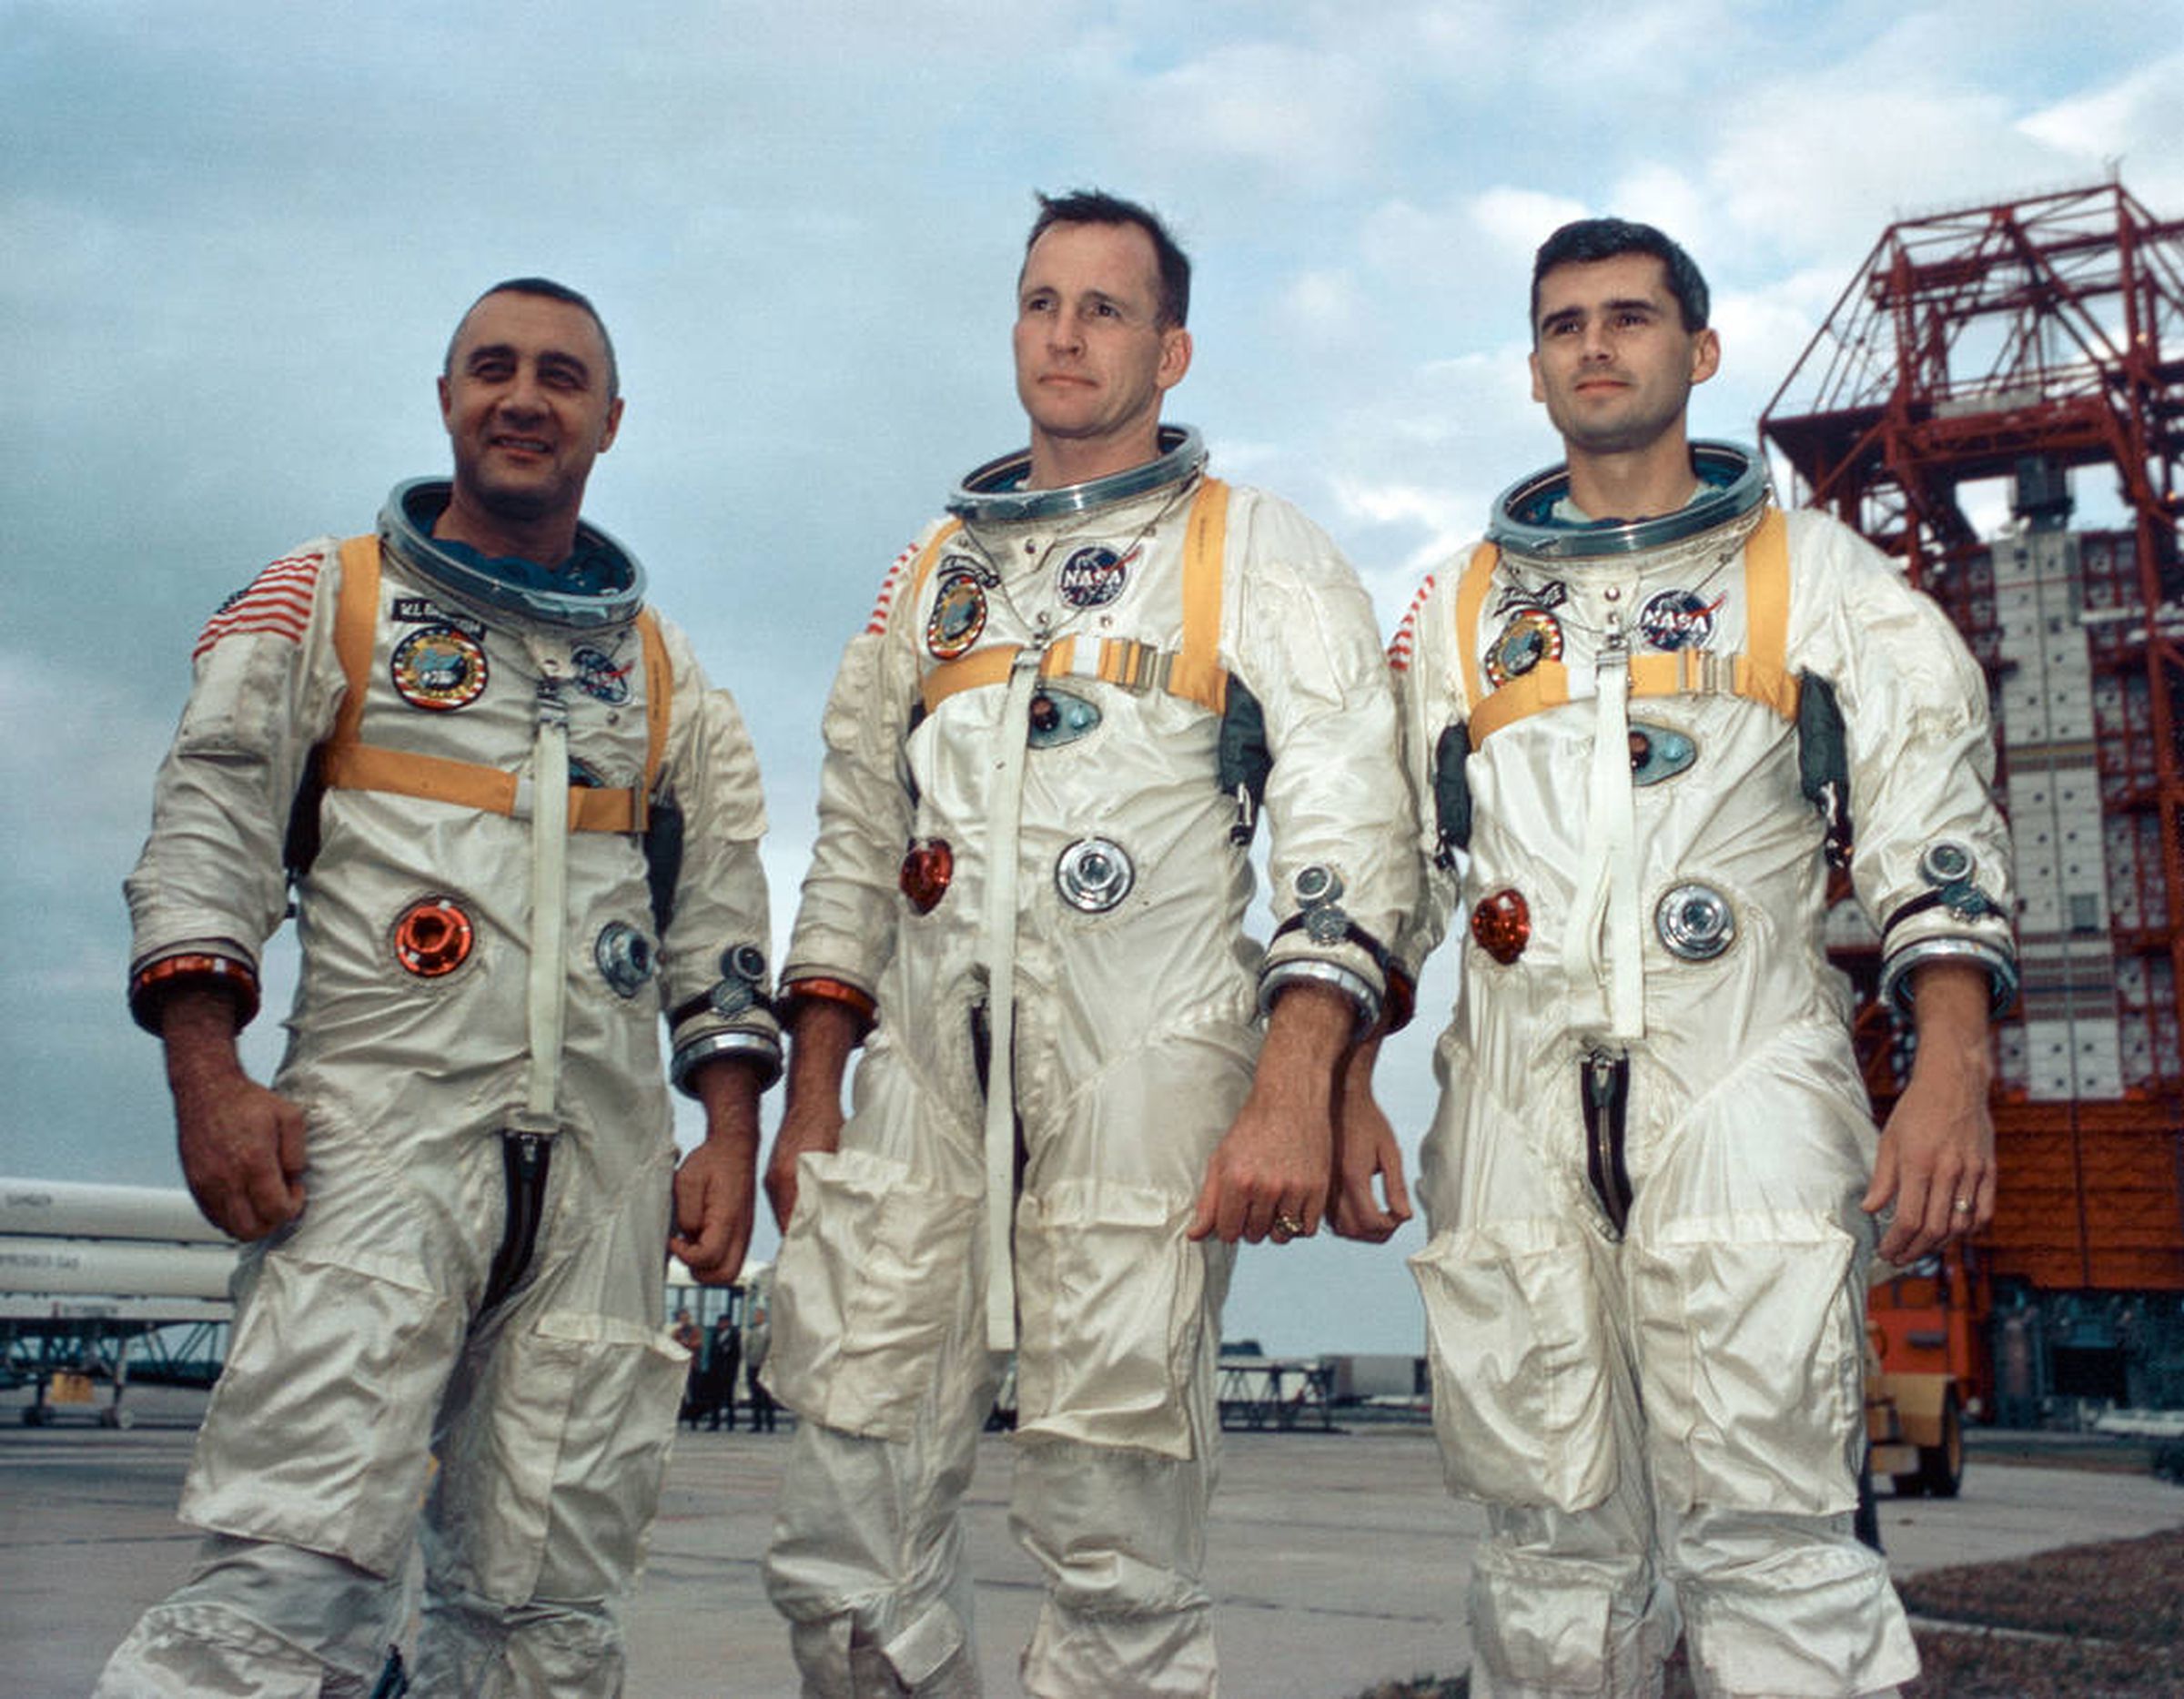 The Apollo 1 crew.